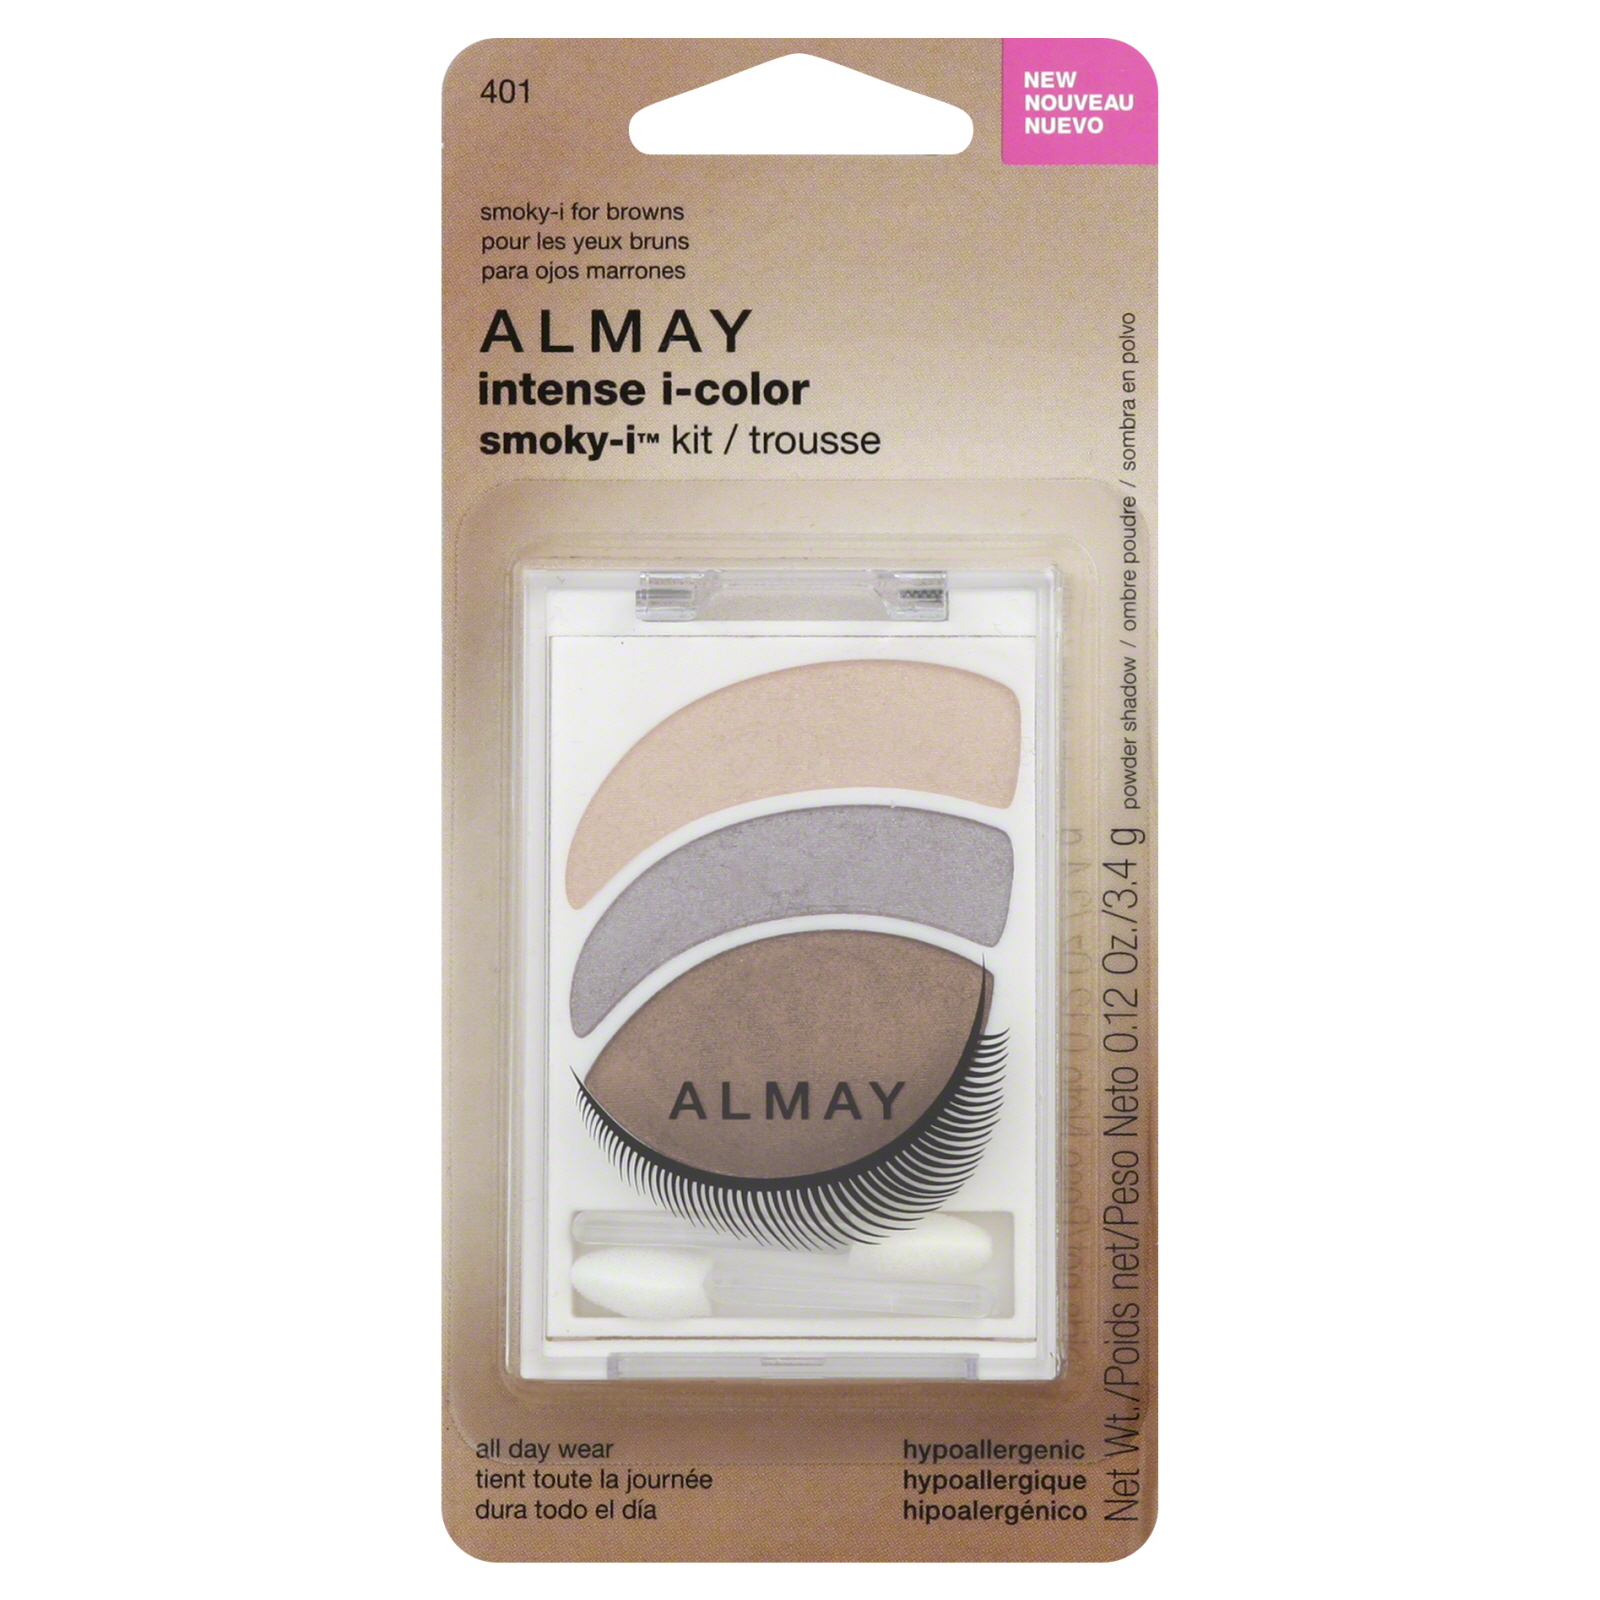 Almay Intense i-Color Smoky-i Powder Shadow Kit, Smoky-i for Browns, 0.12 oz (3.4 g)